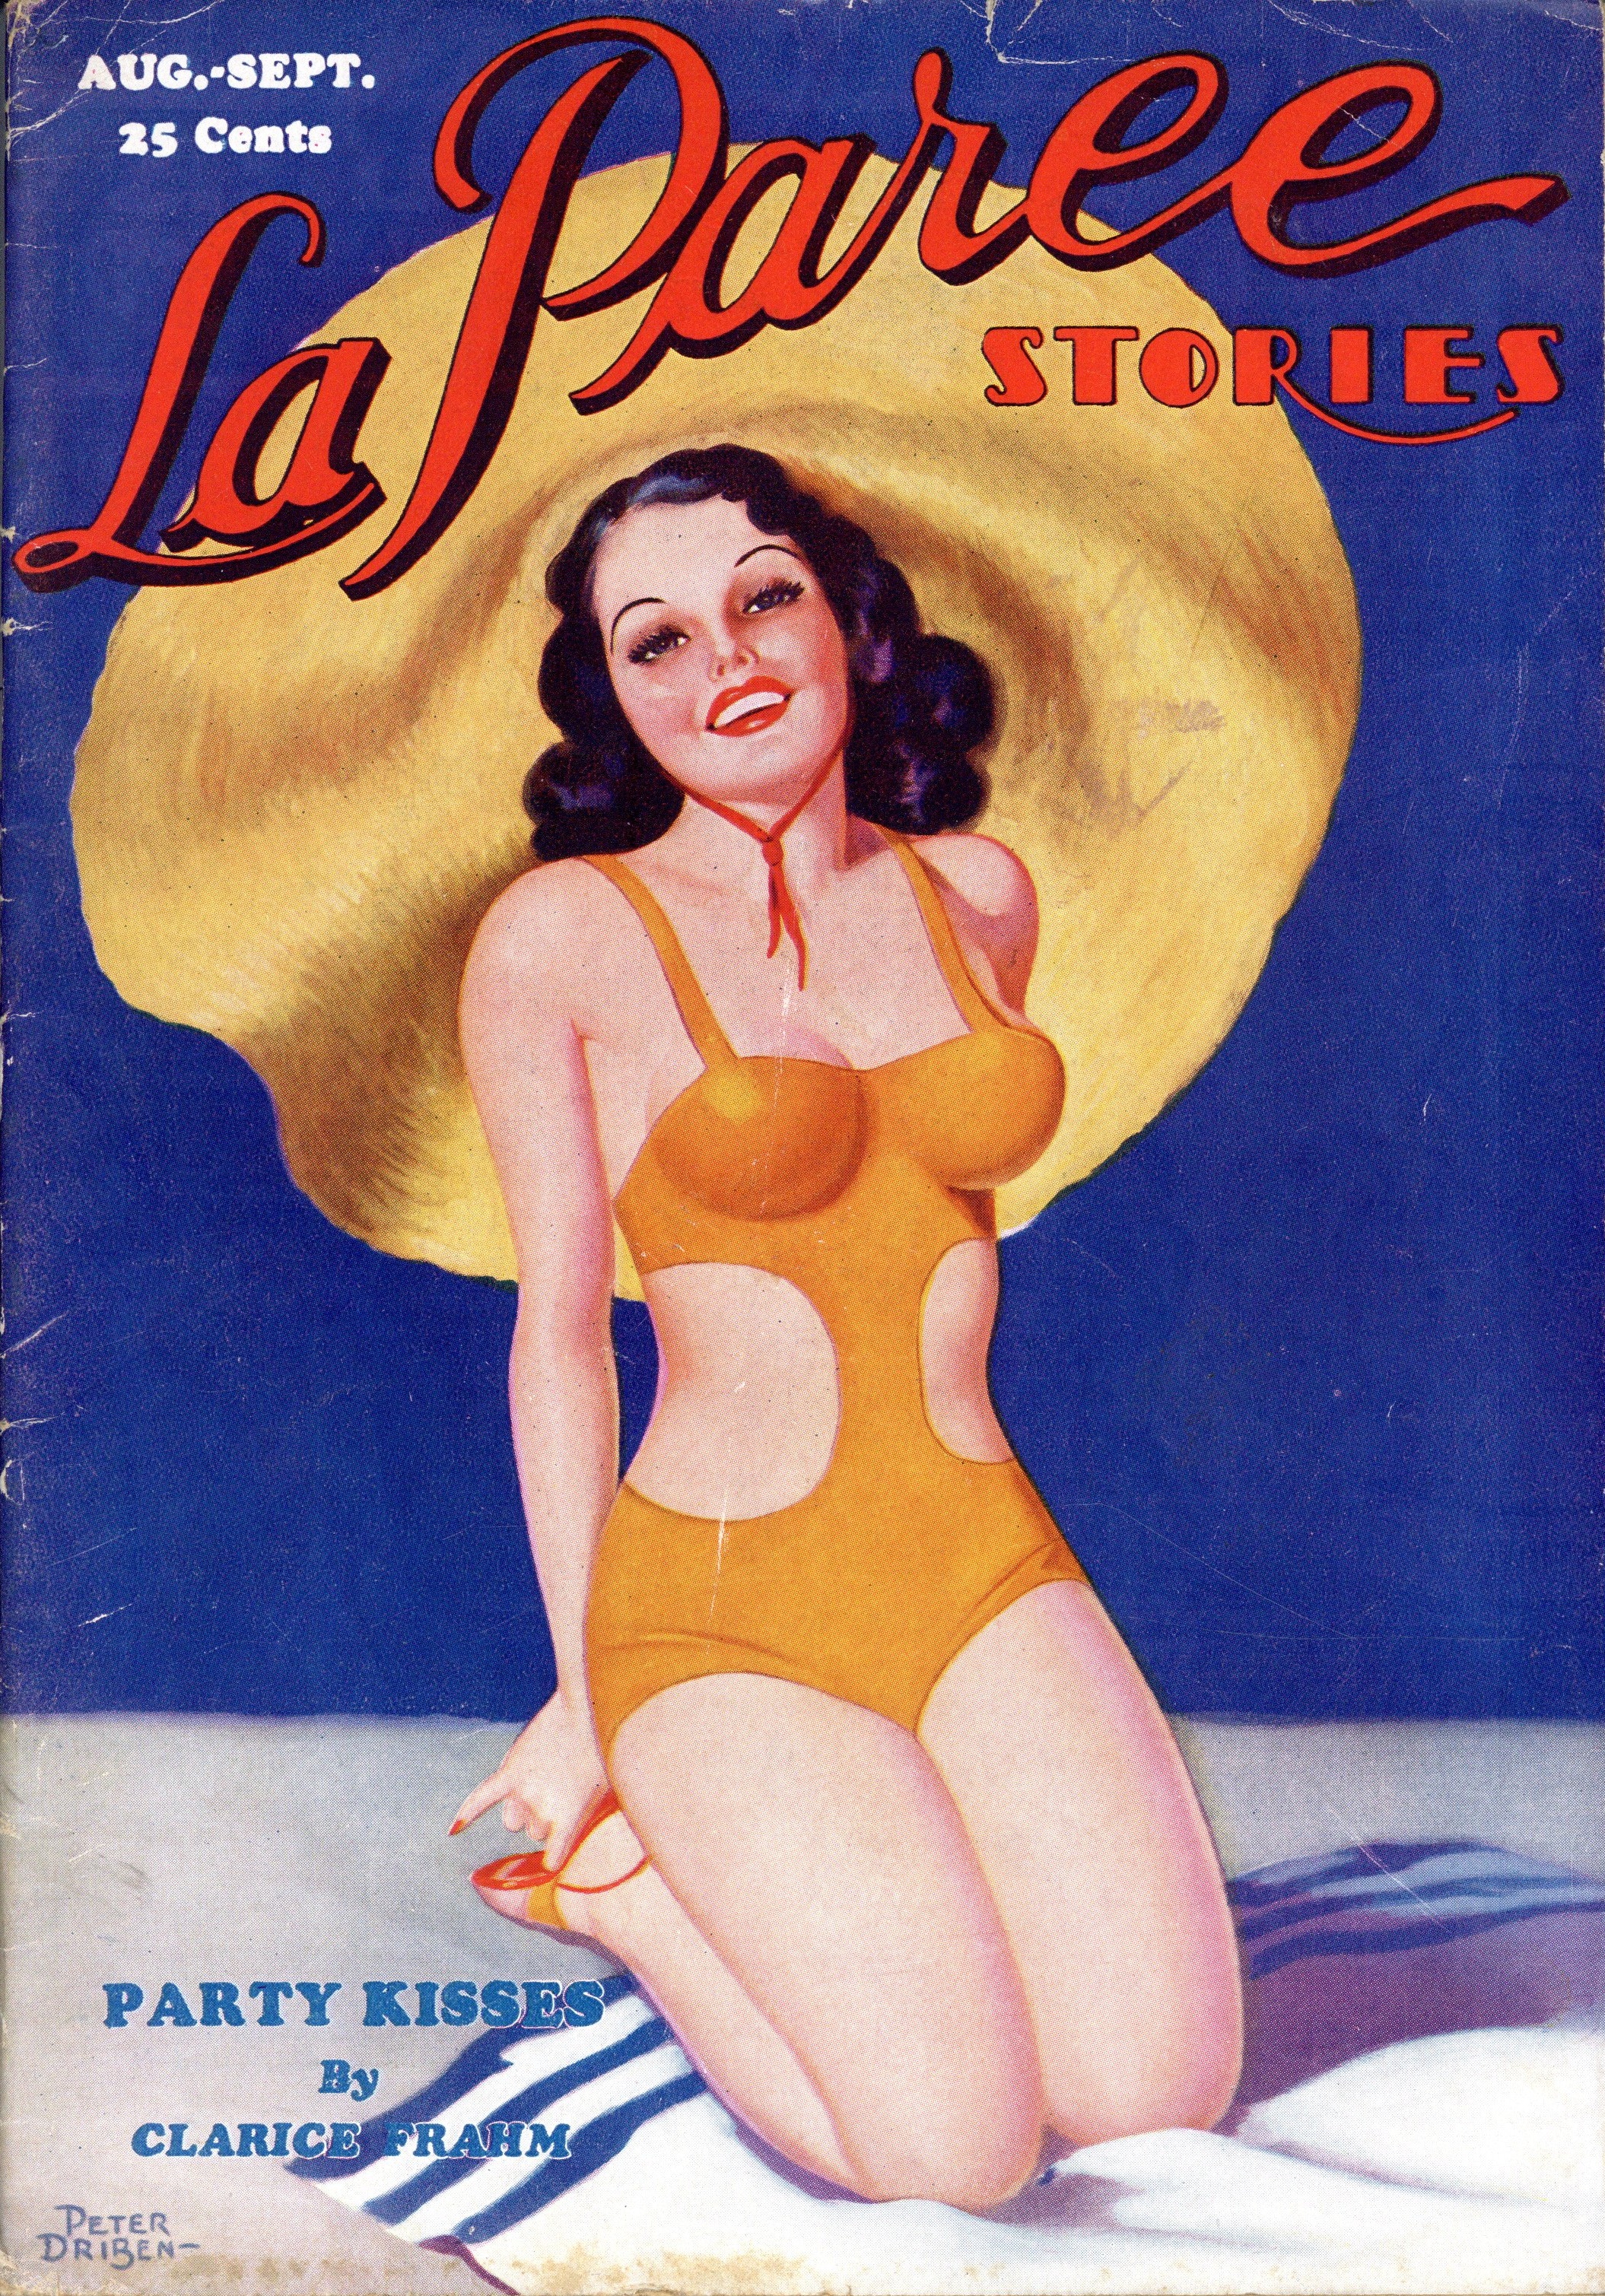 La Paree Stories August September 1938